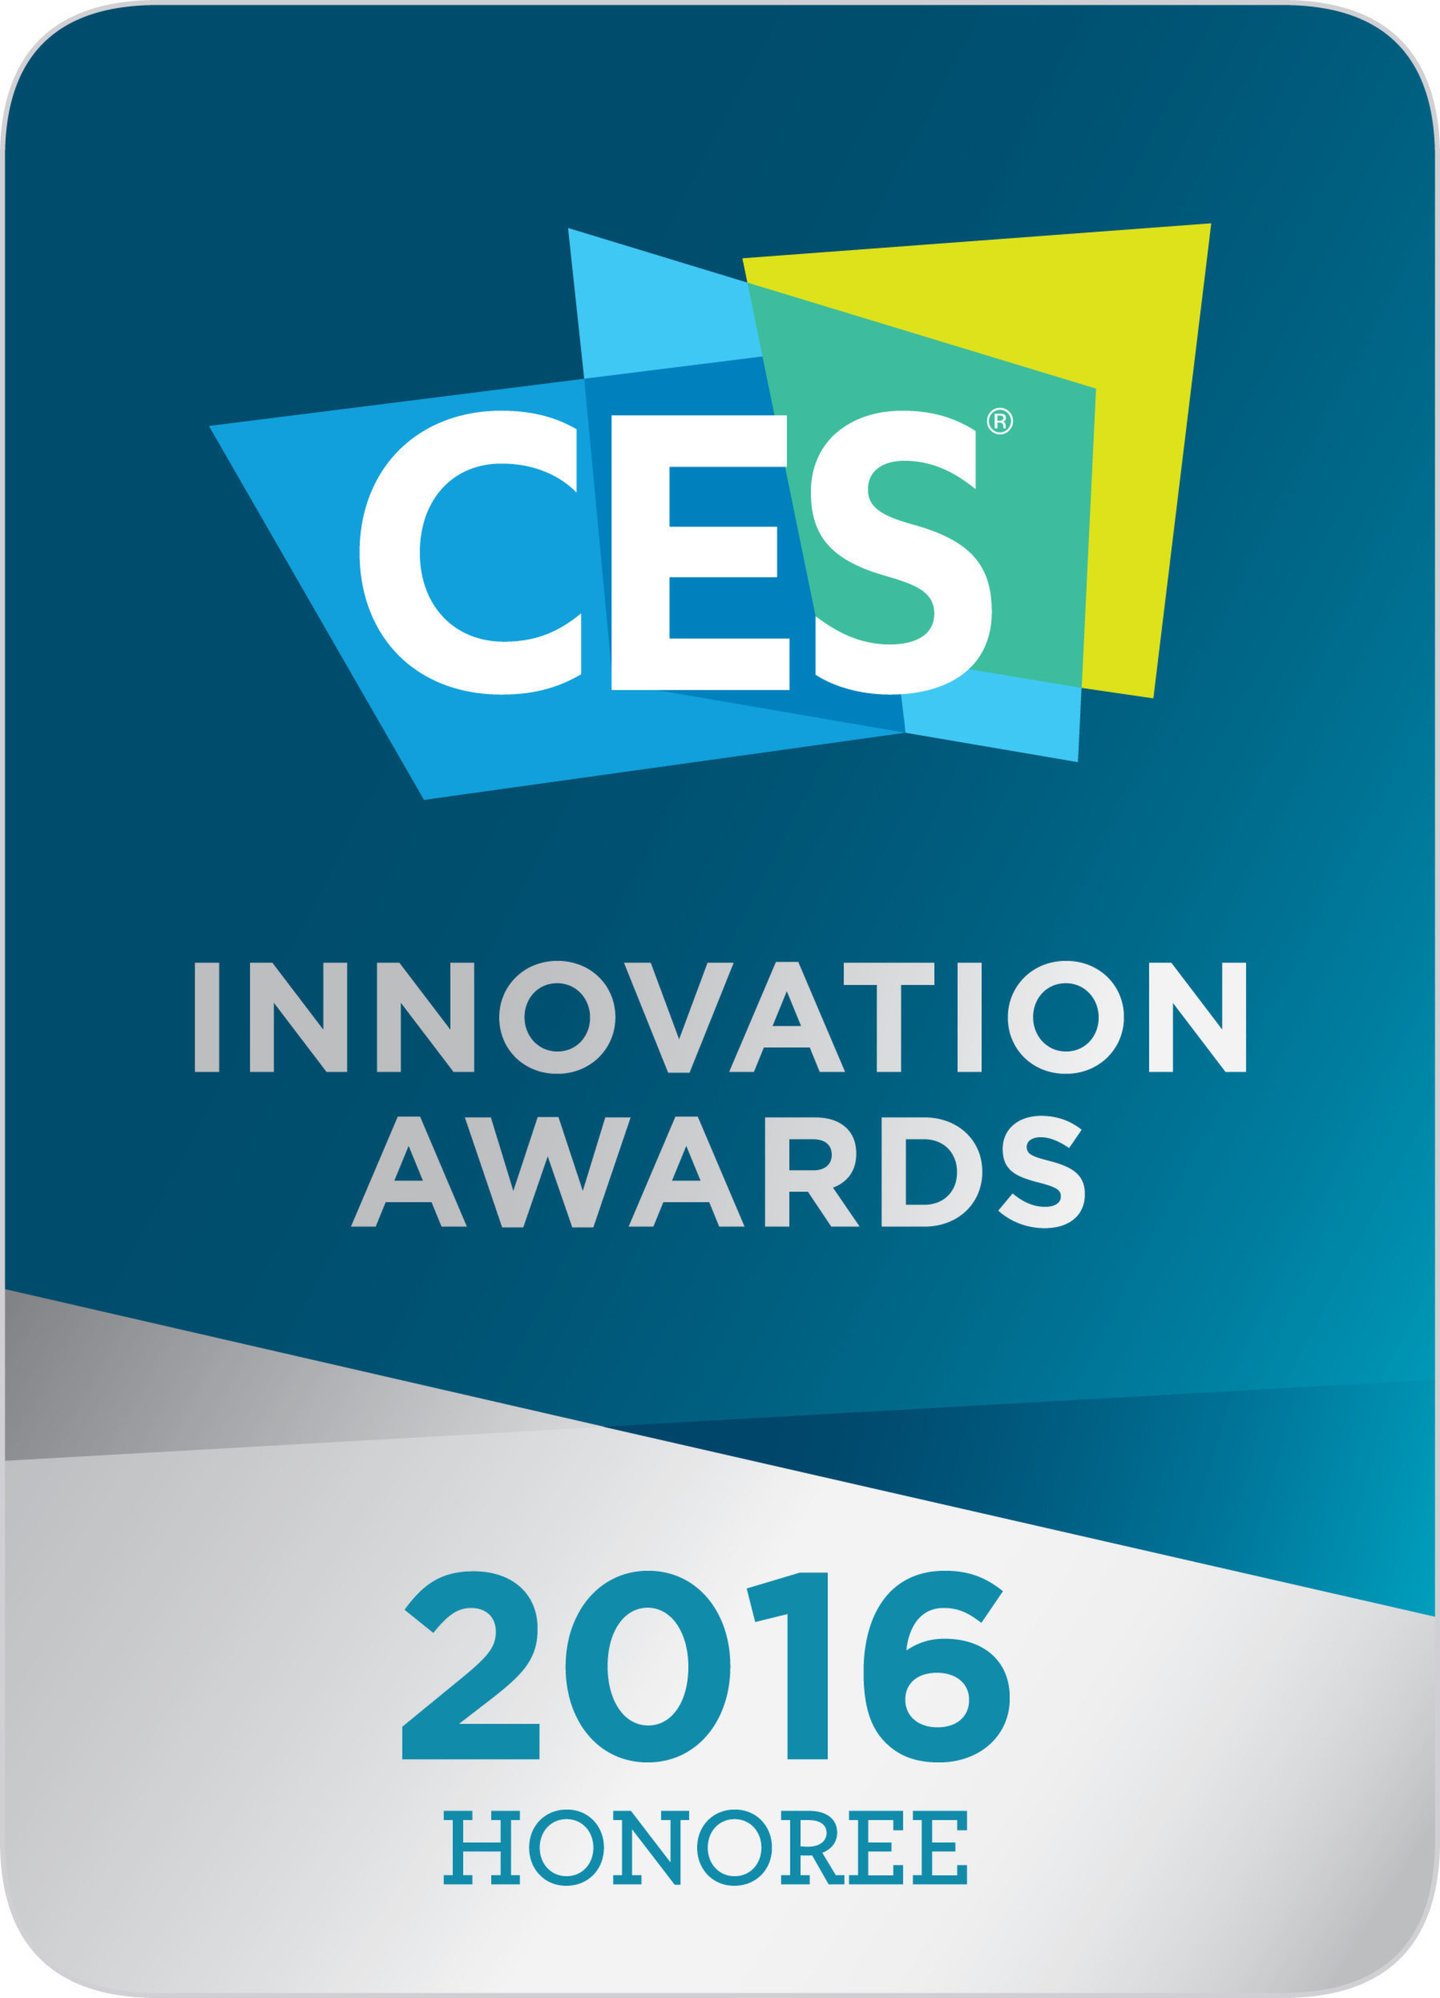 CES innovation awards 2016 badge